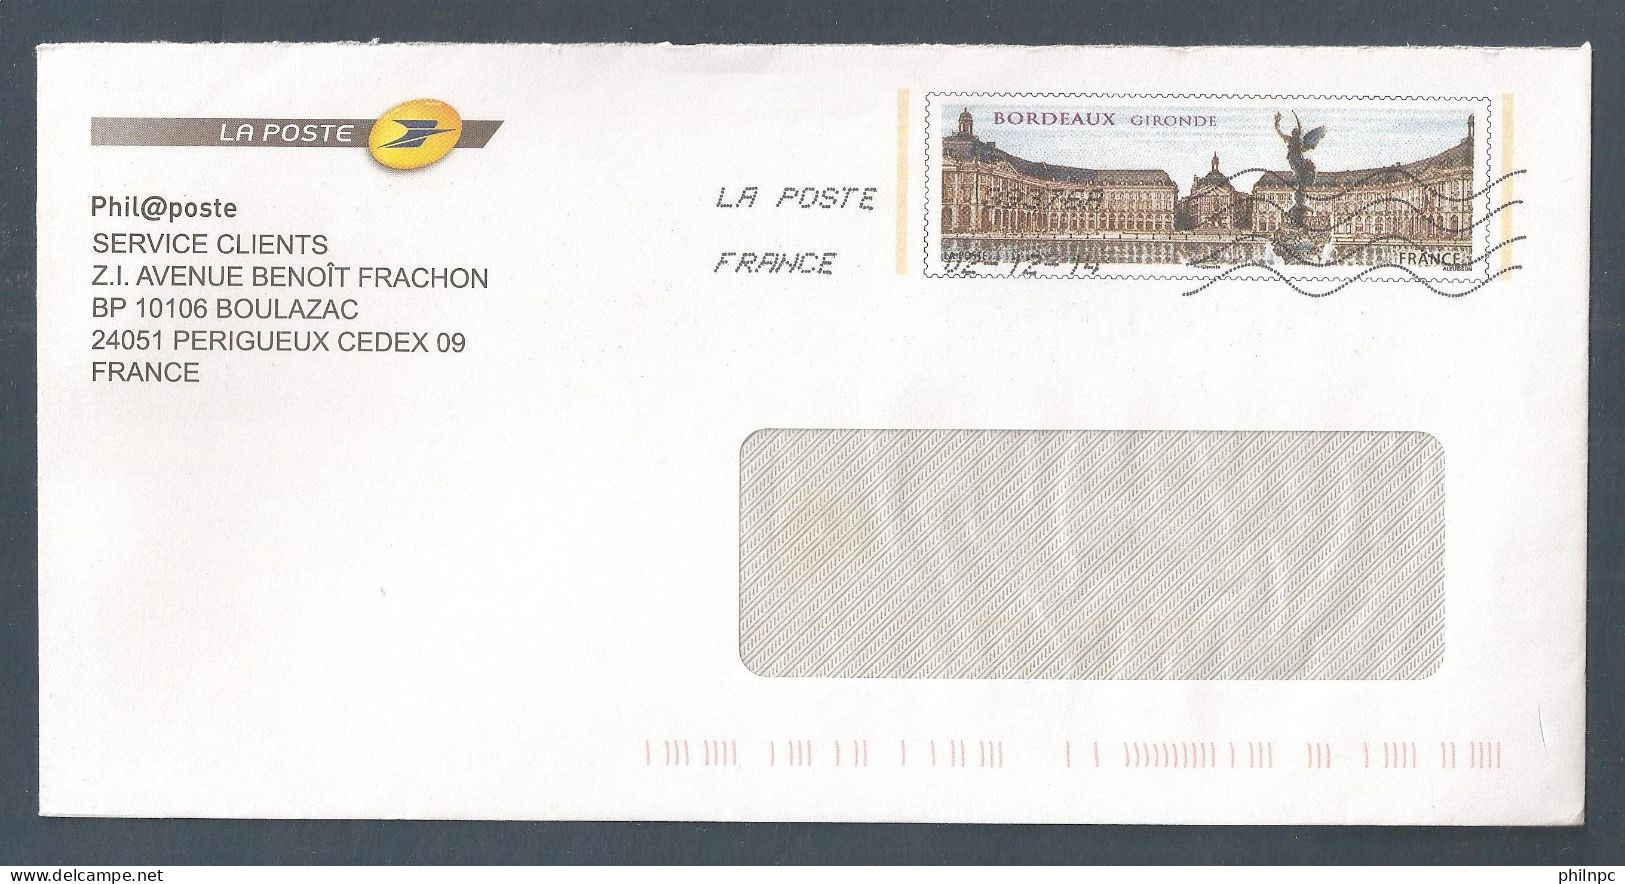 France, Entier Postal, Prêt à Poster, 4370, Phil@poste, Bordeaux, Gironde - Prêts-à-poster:Stamped On Demand & Semi-official Overprinting (1995-...)